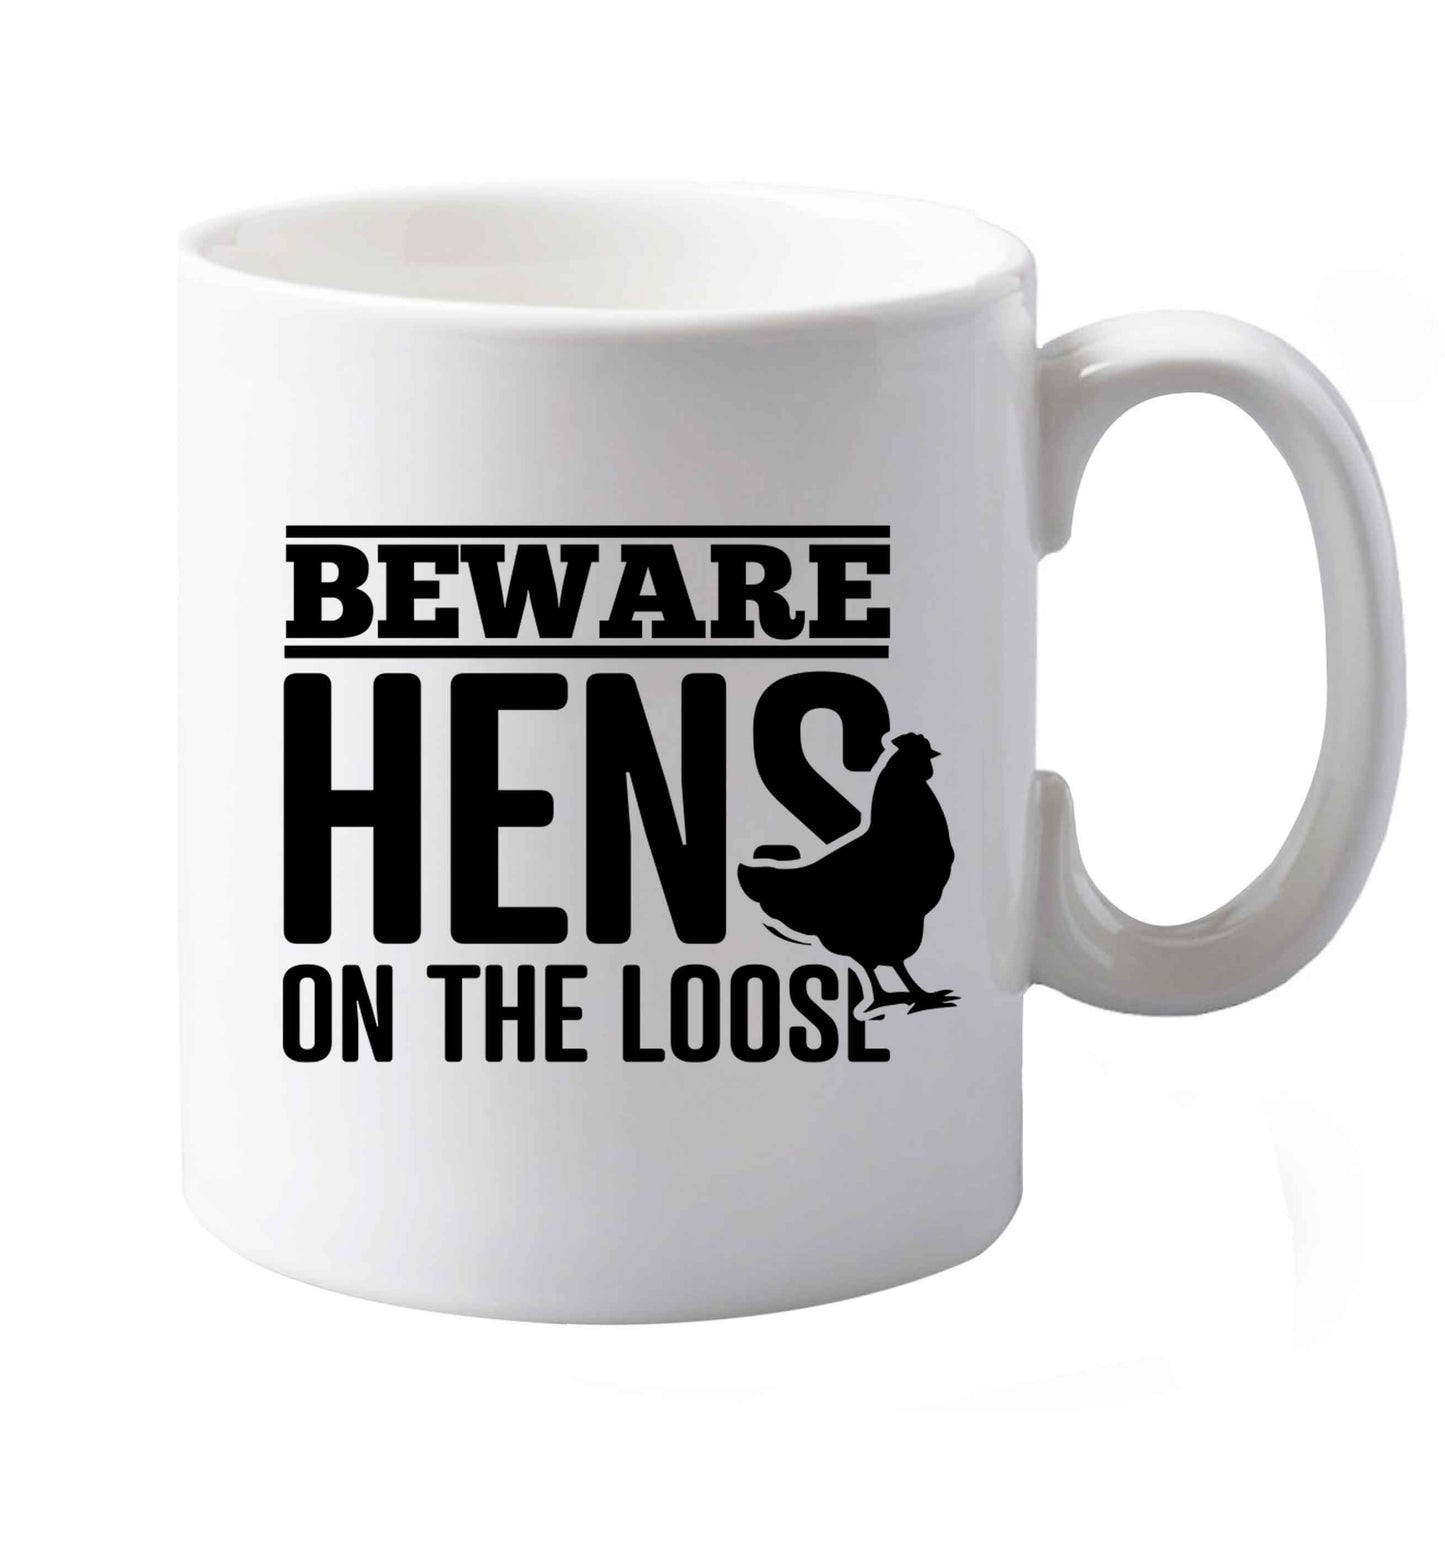 10 oz Beware hens on the loose   ceramic mug both sides